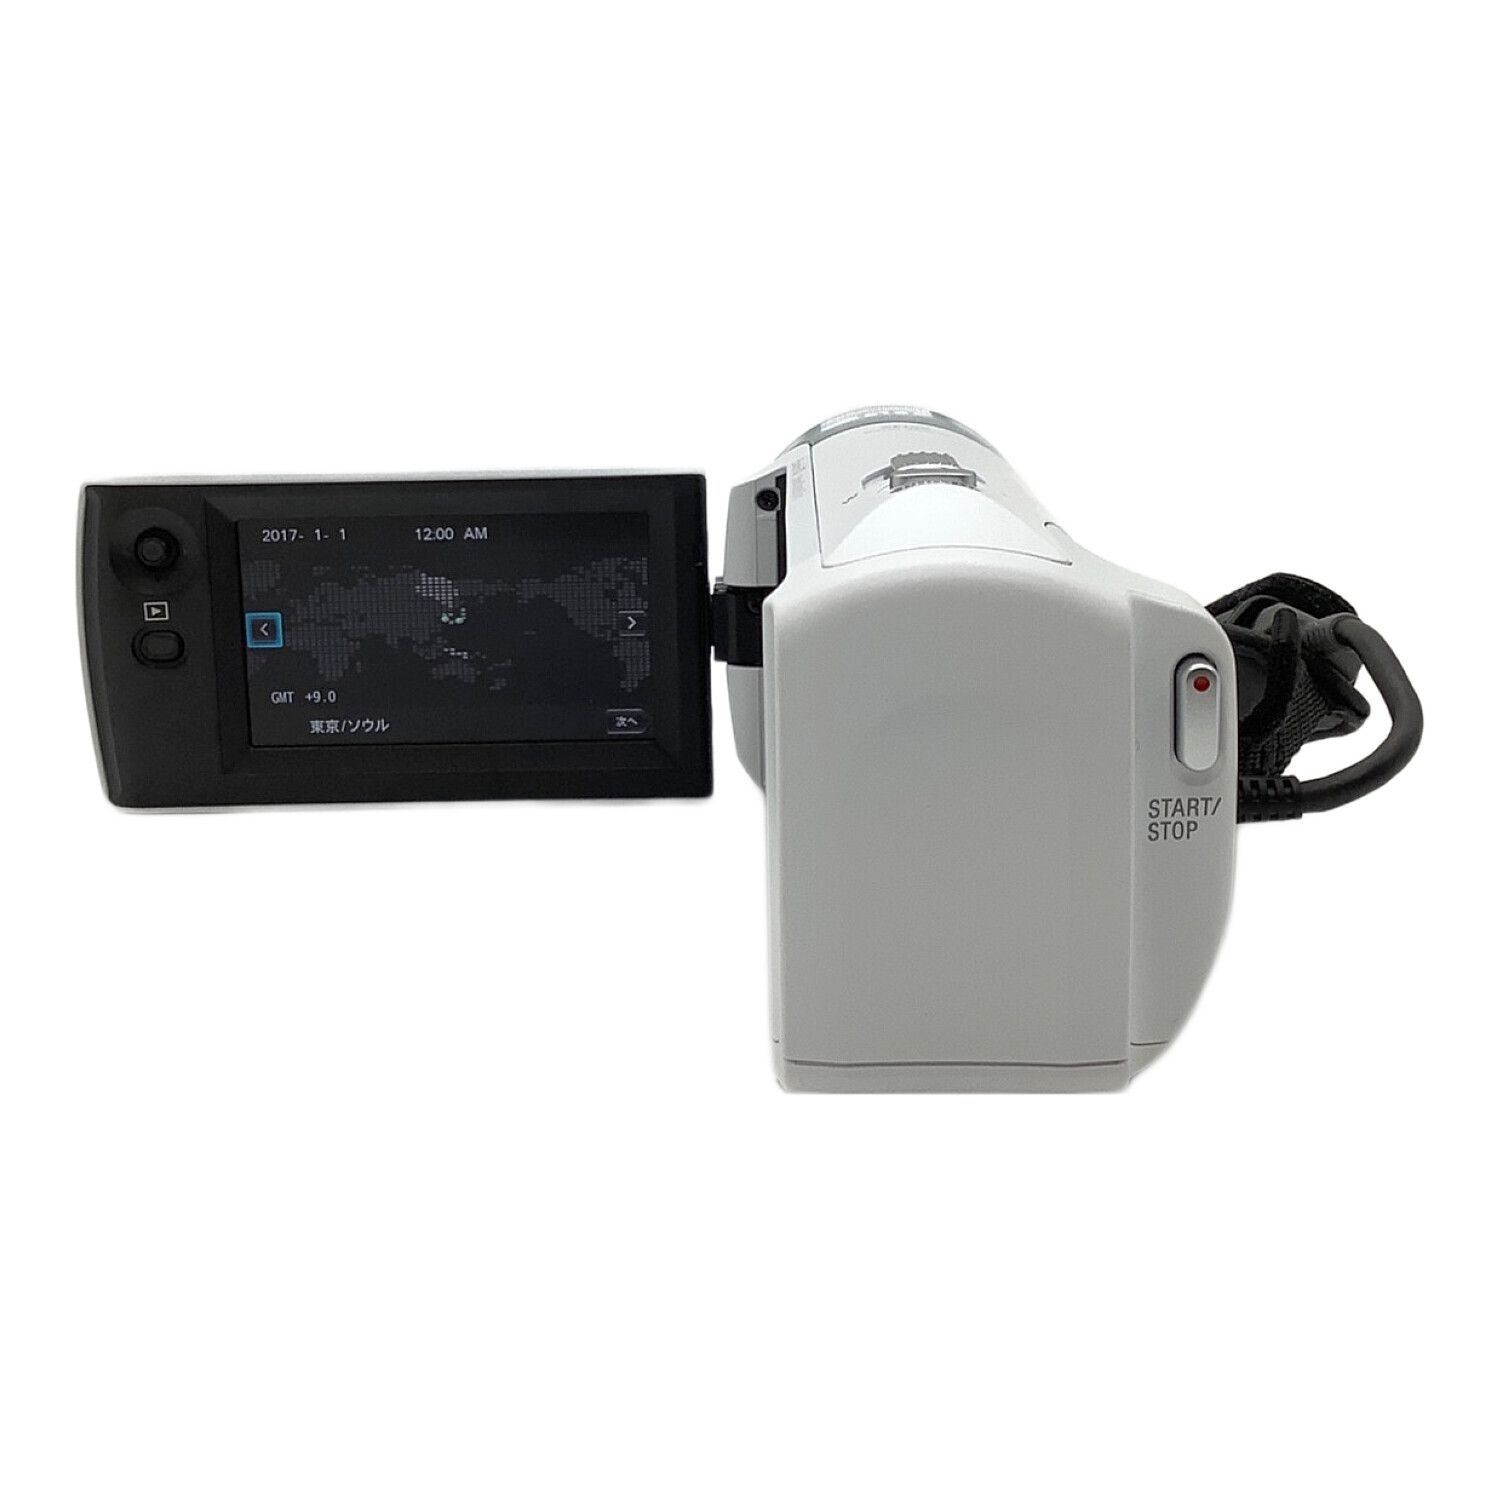 SONY (ソニー) デジタルビデオカメラ 229万画素 microSDカード対応 HDR-CX470 3081854｜トレファクONLINE